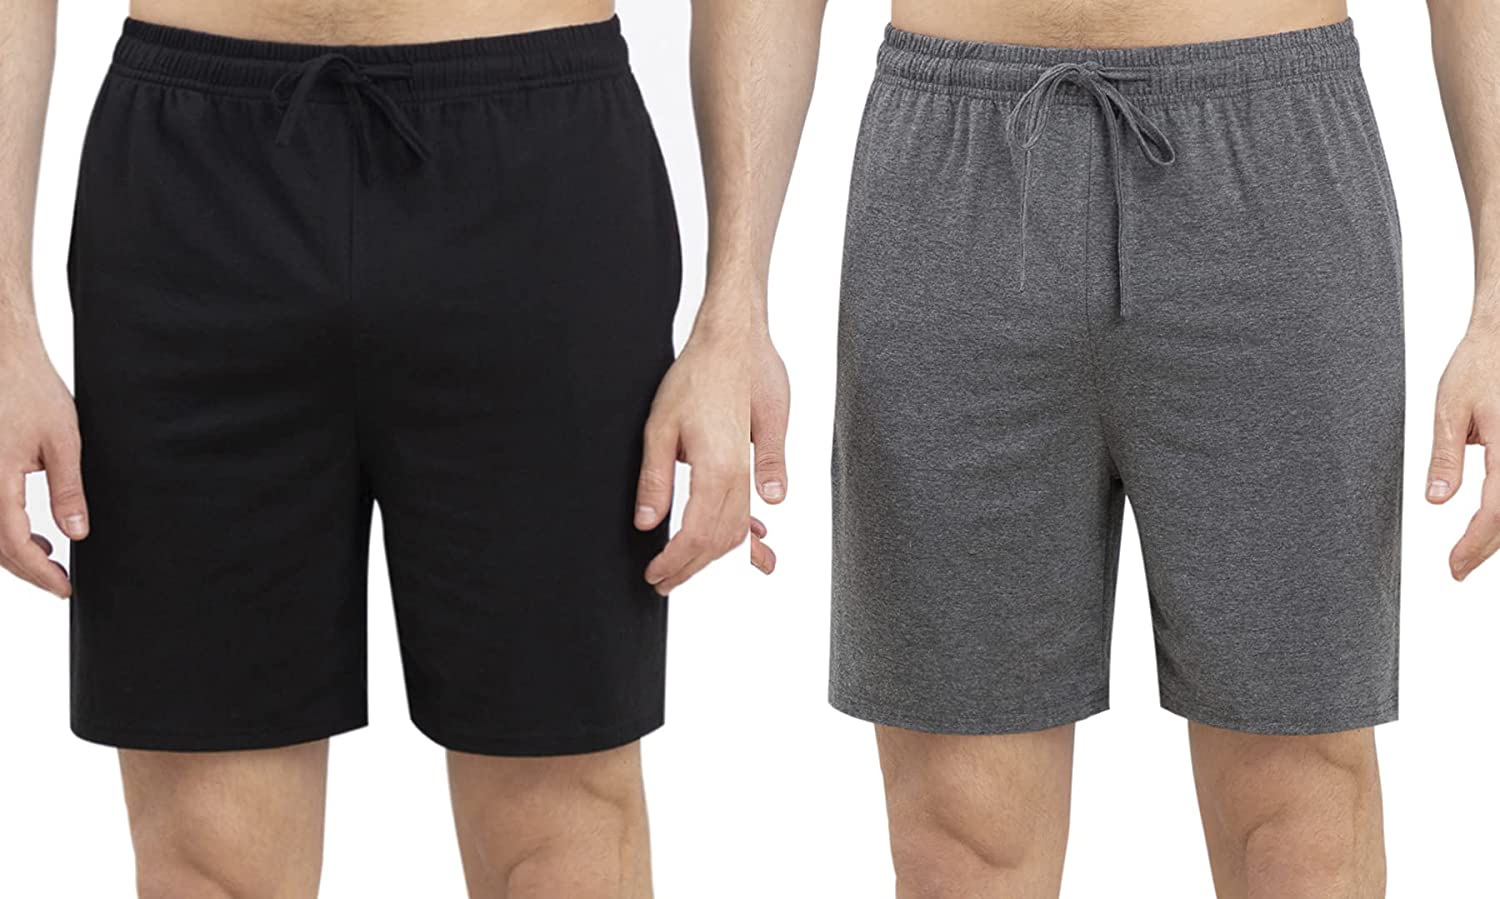 YIMANIE Men's Pajama Shorts Cotton Comfy Soft Lounge Sleep Shorts Separate Bottoms 